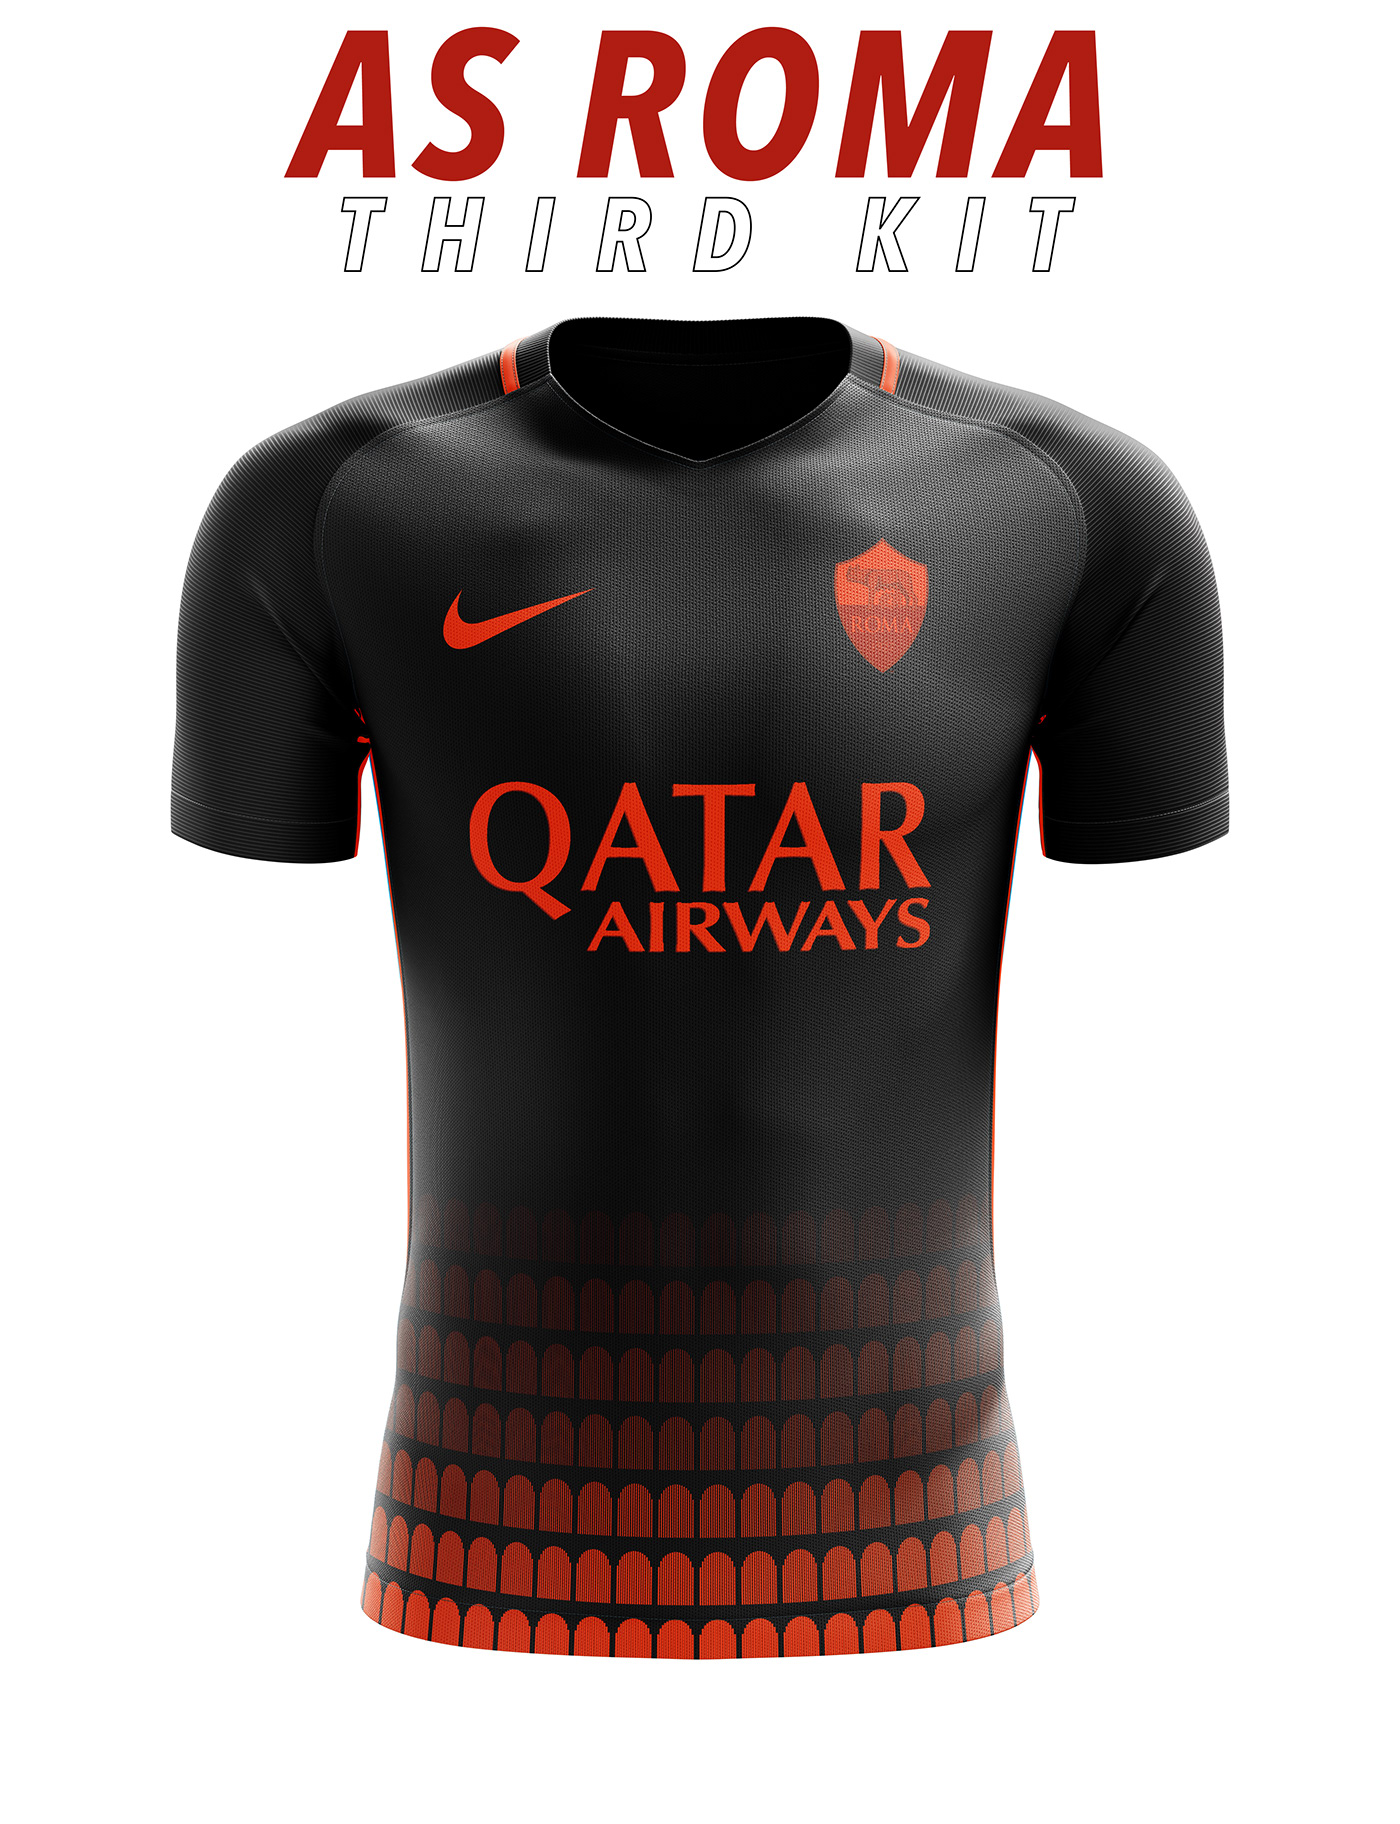 Nike adidas football soccer jersay Football kit